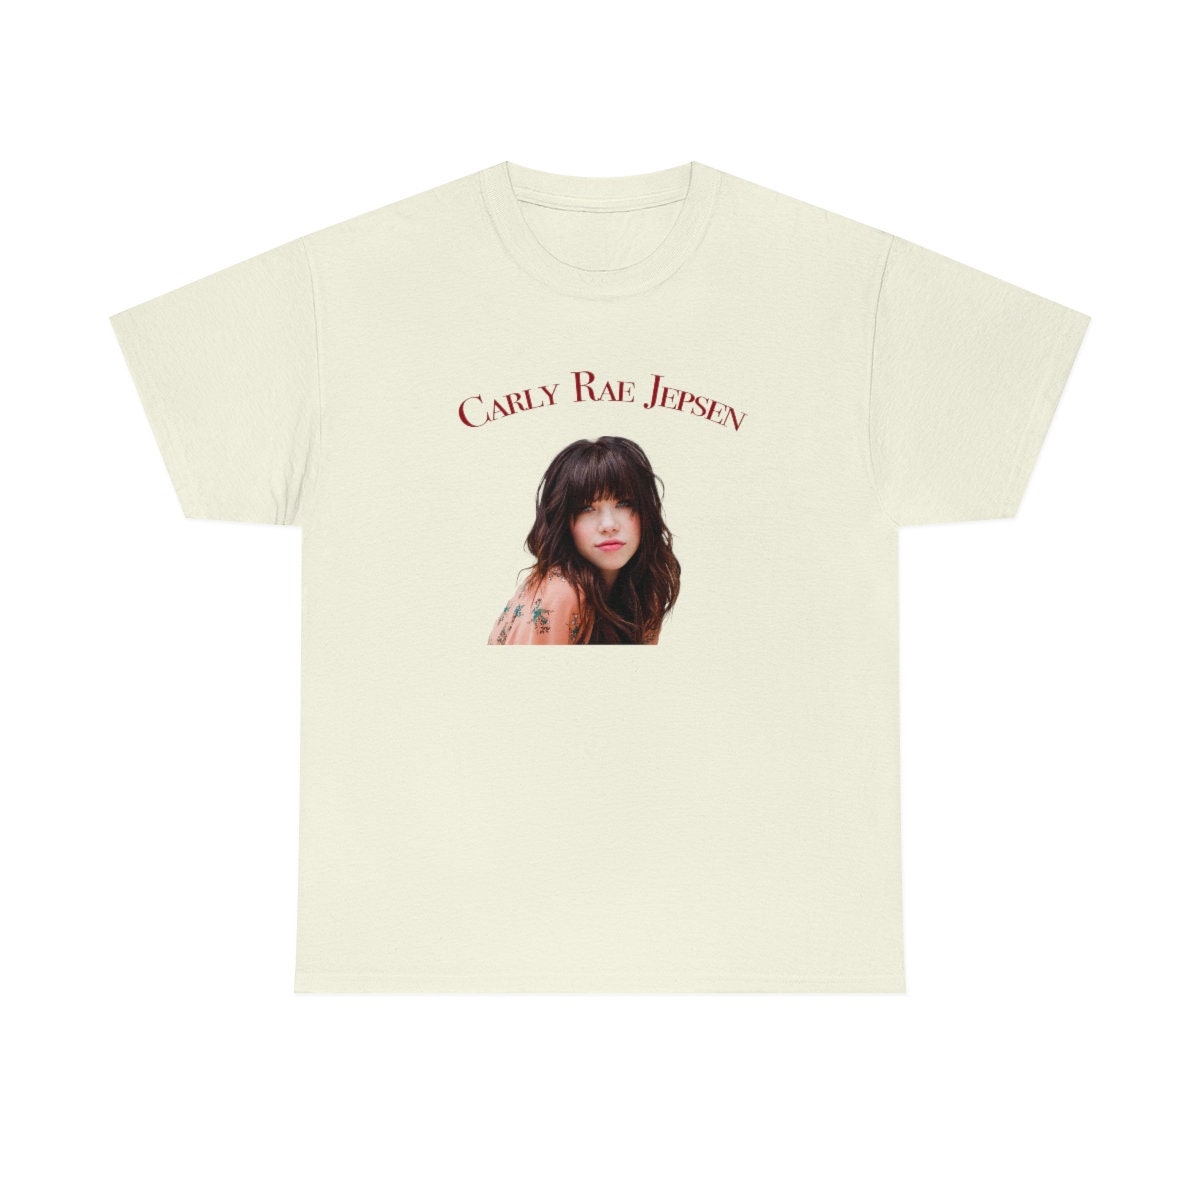 Carly Rae Jepsen Shirt, the Loneliest Time New Album, Tour Merch